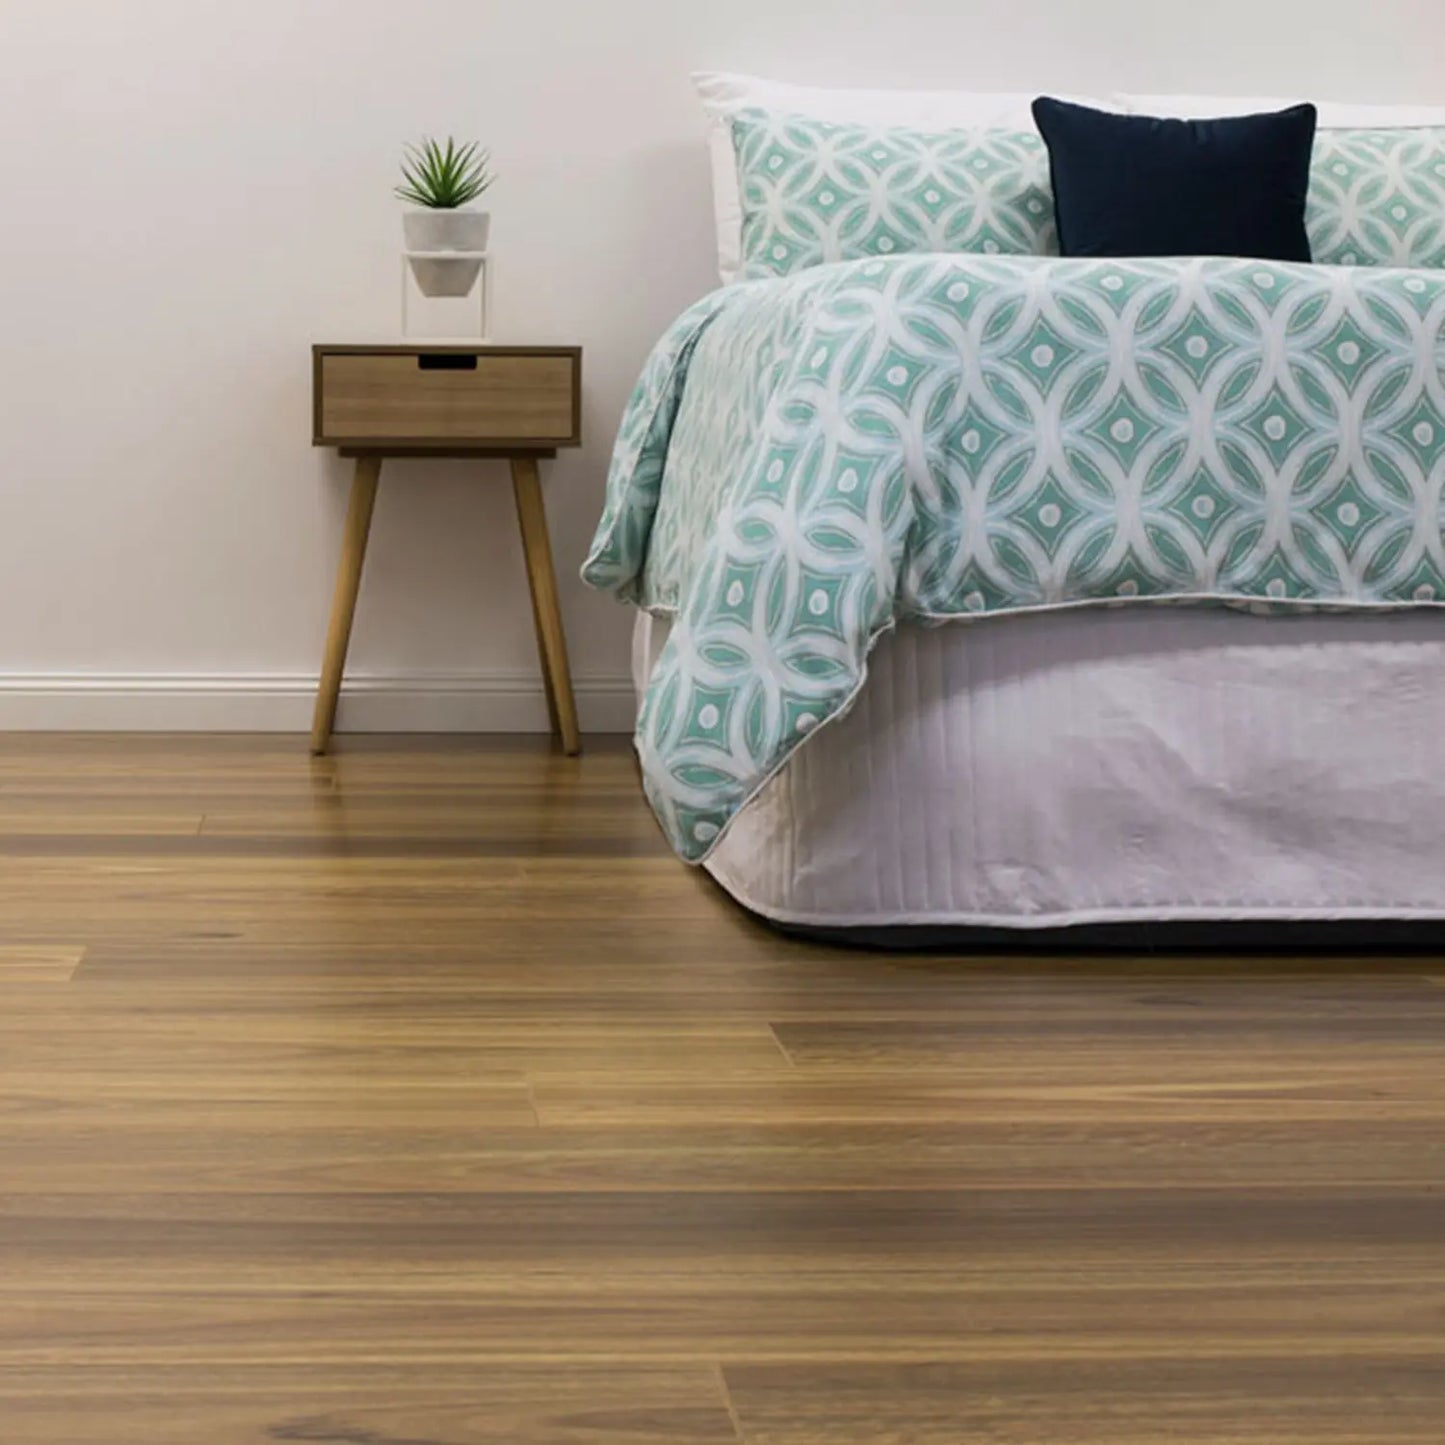 Ultimate Spotted Gum Laminate Flooring Australian Select Timbers